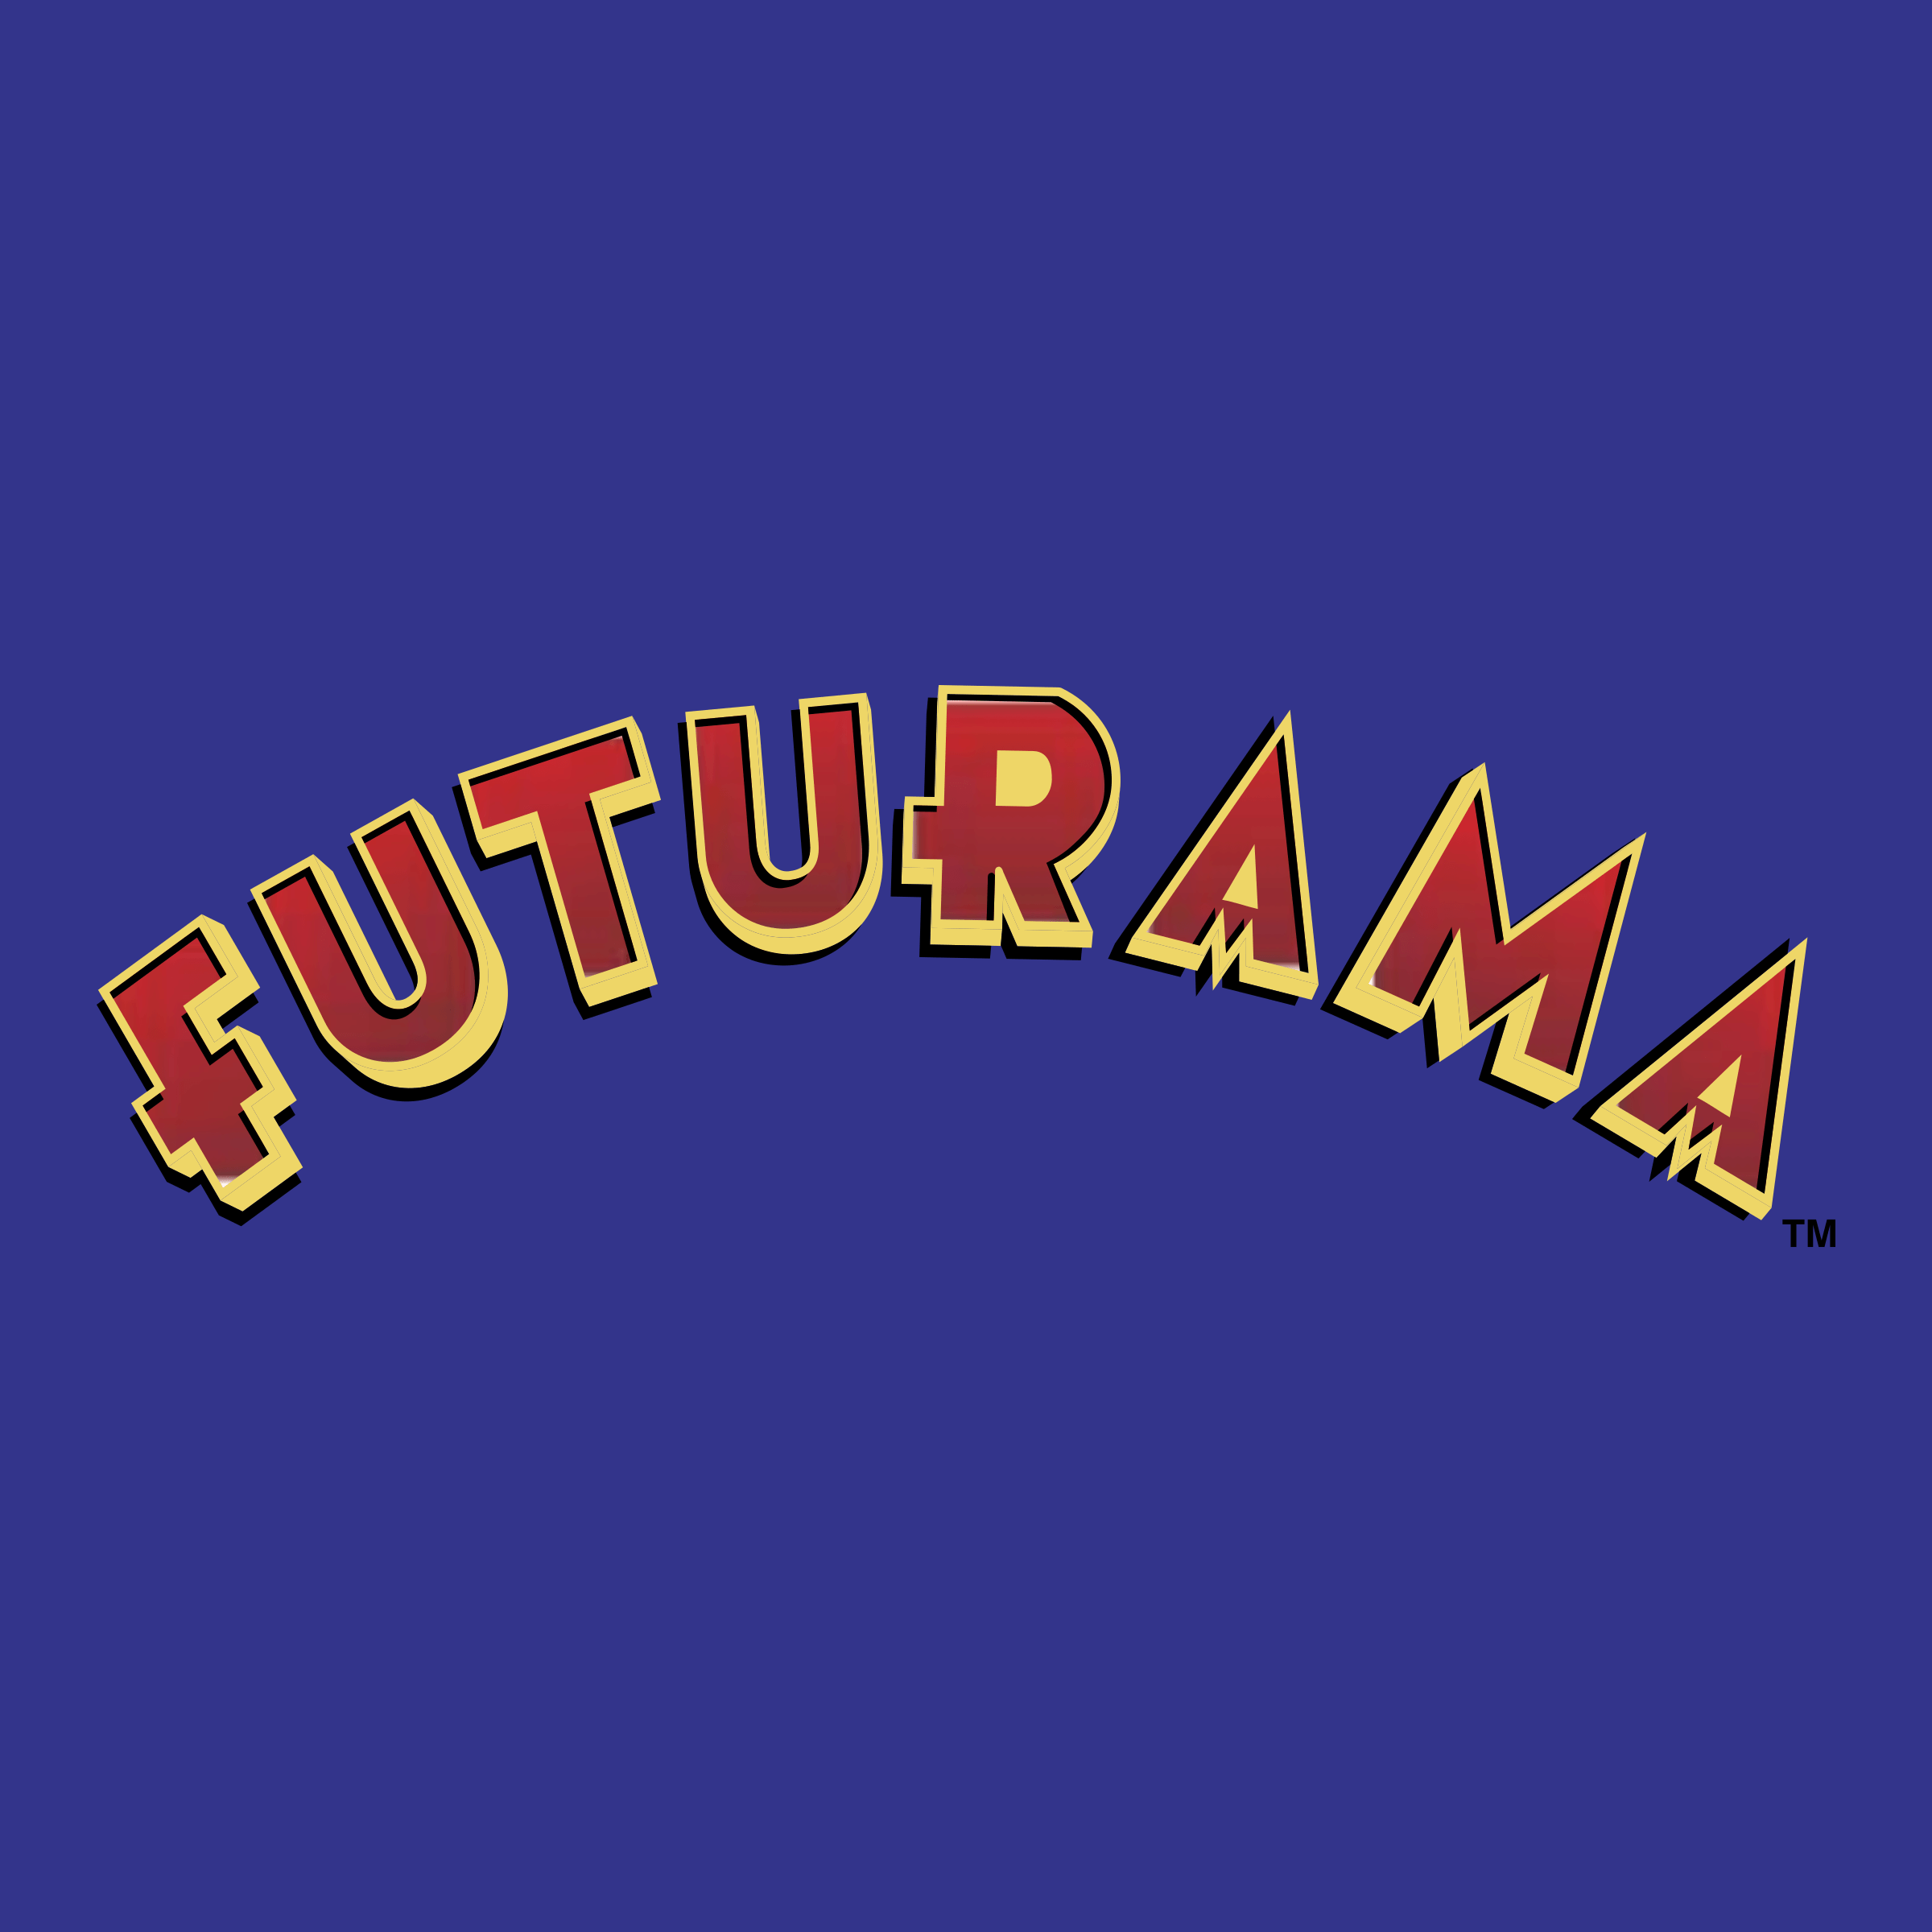 Futurama Logo - Futurama Logo PNG Transparent & SVG Vector - Freebie Supply